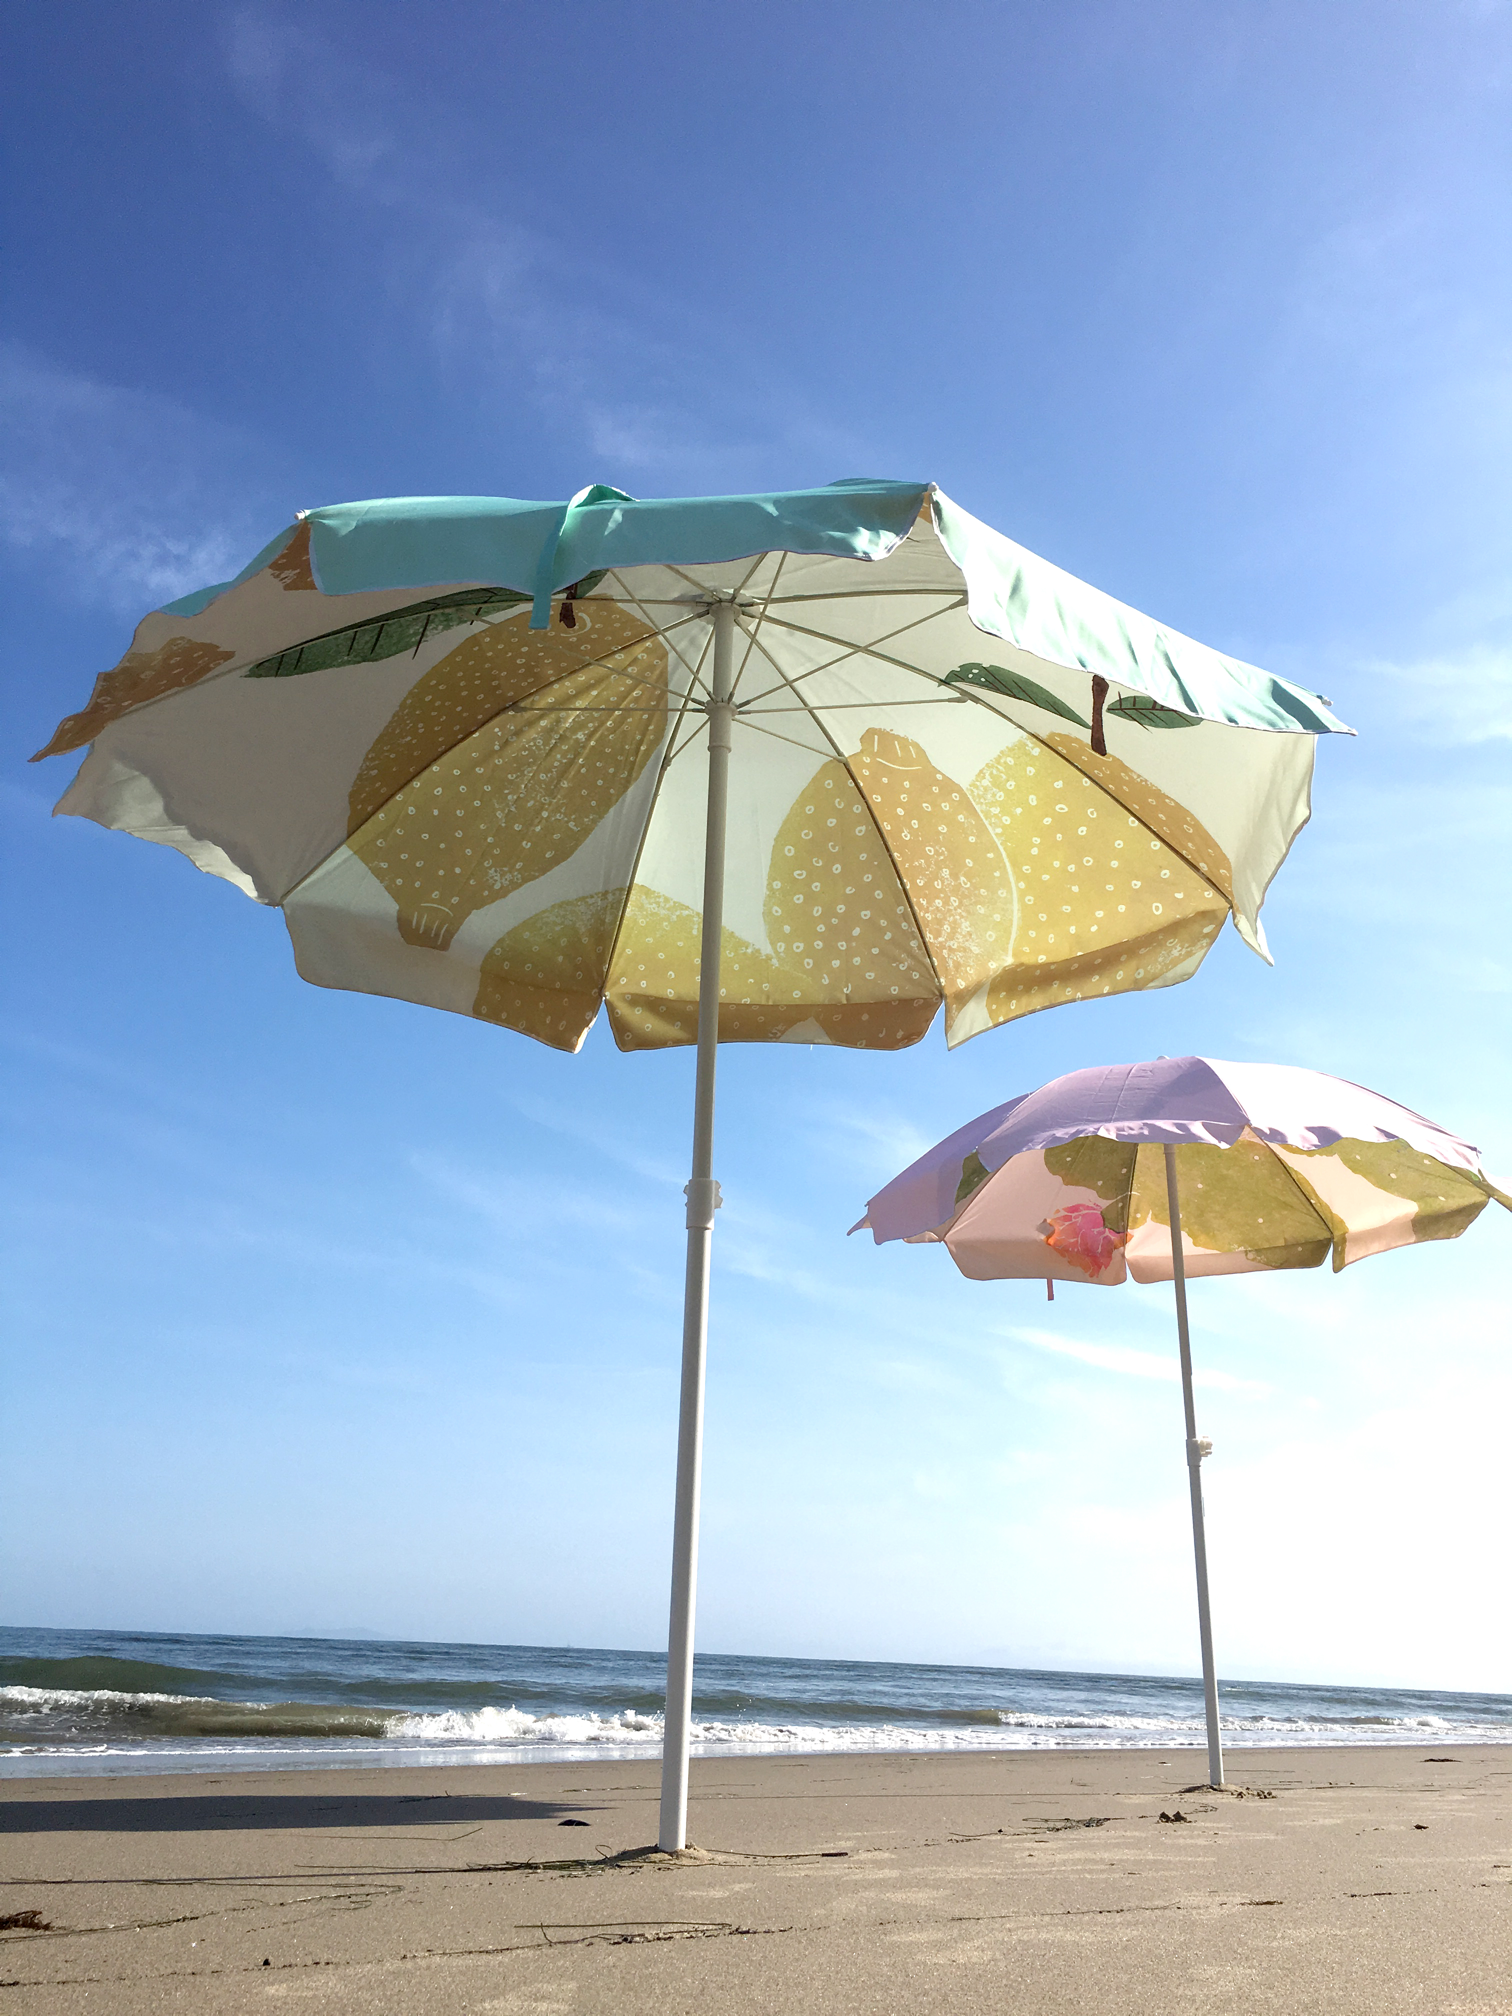 The Family Beach Umbrella